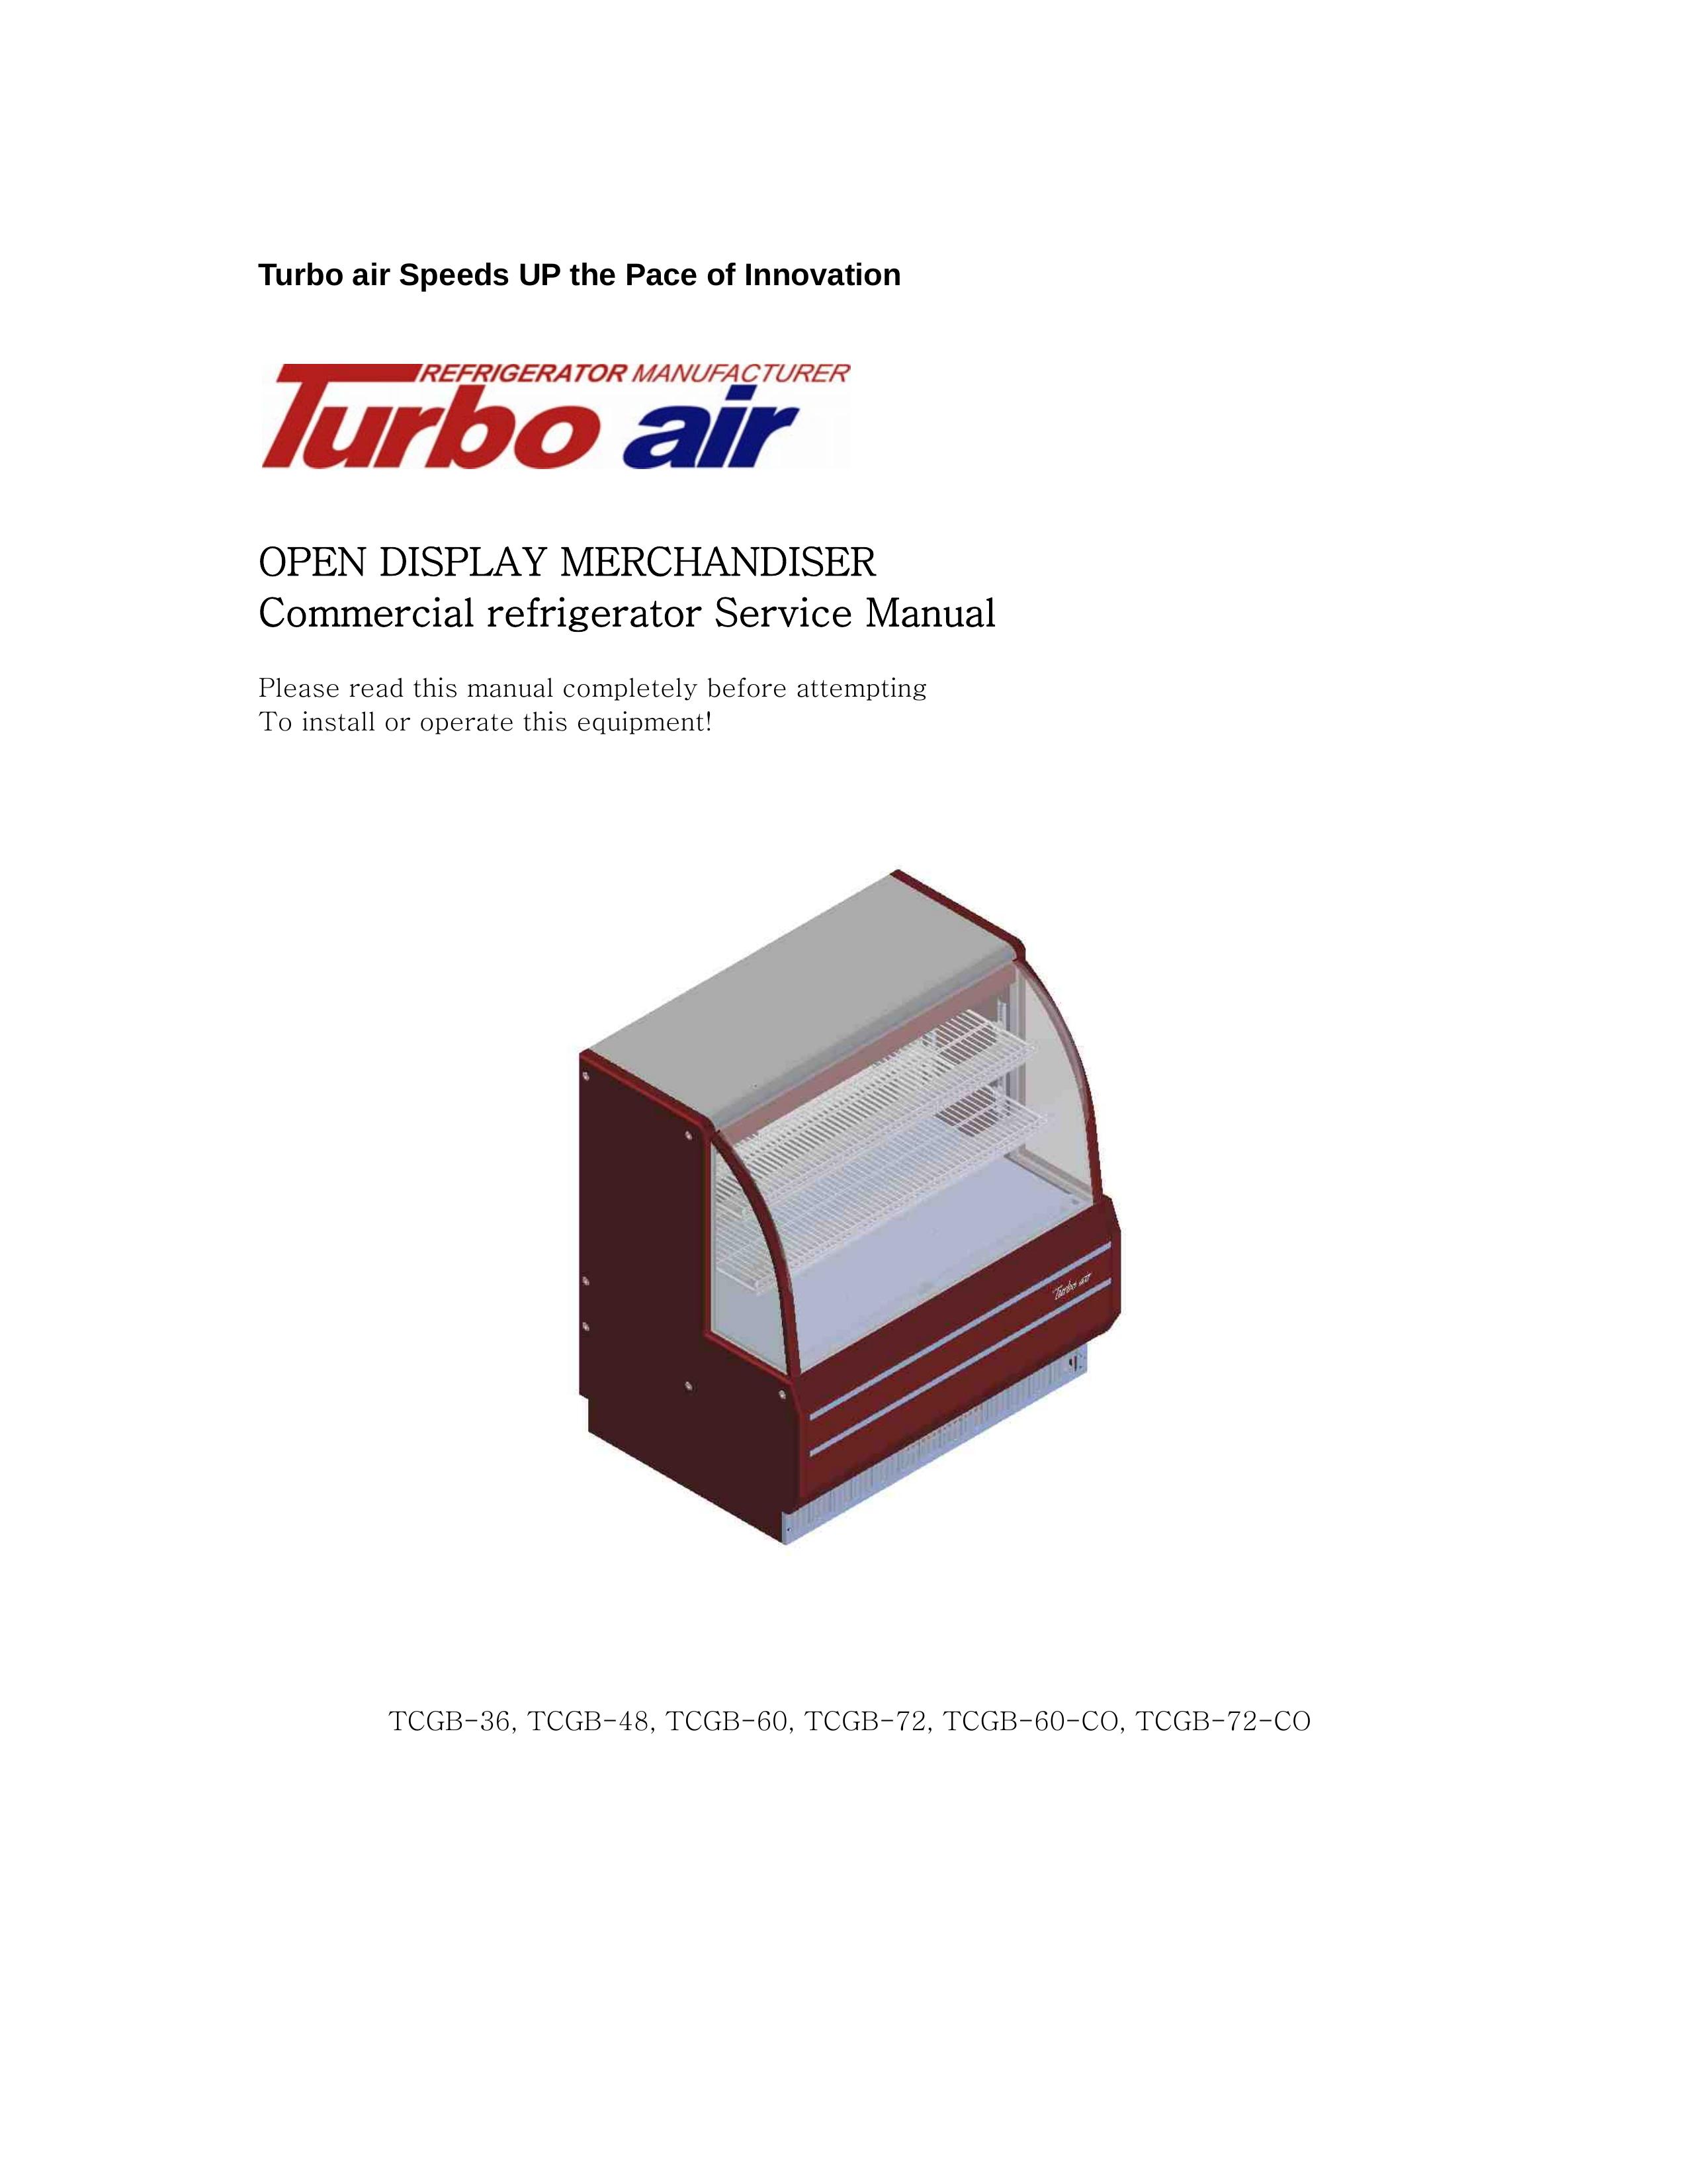 Turbo Air TCGB-72-CO Refrigerator User Manual